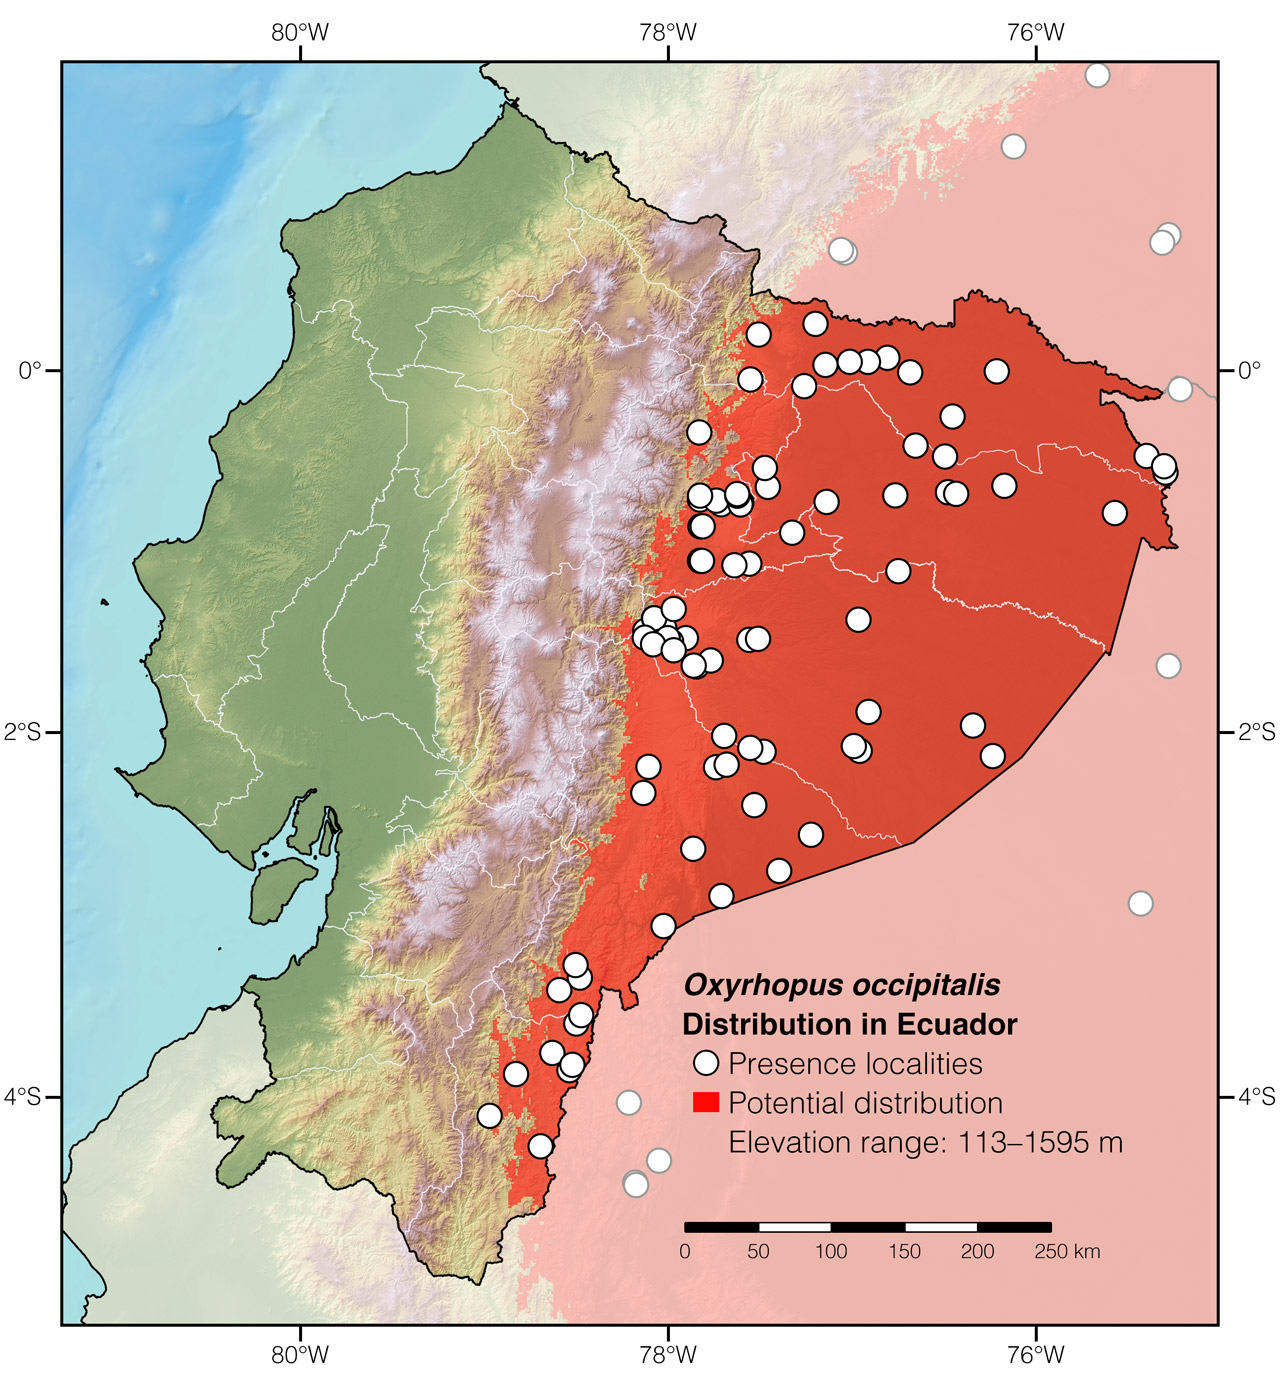 Distribution of Oxyrhopus occipitalis in Ecuador